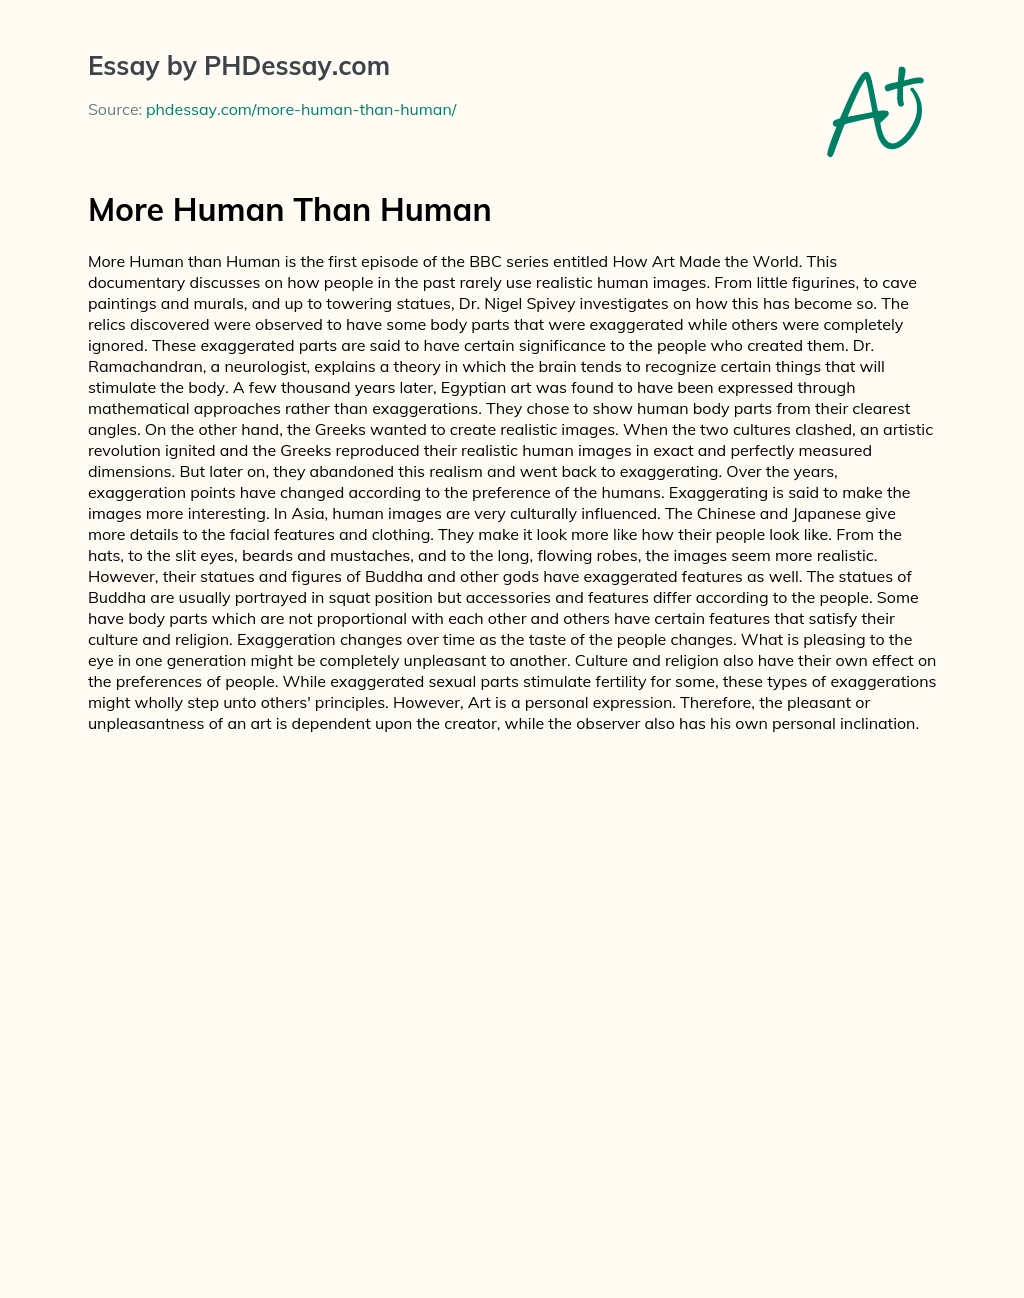 More Human Than Human essay